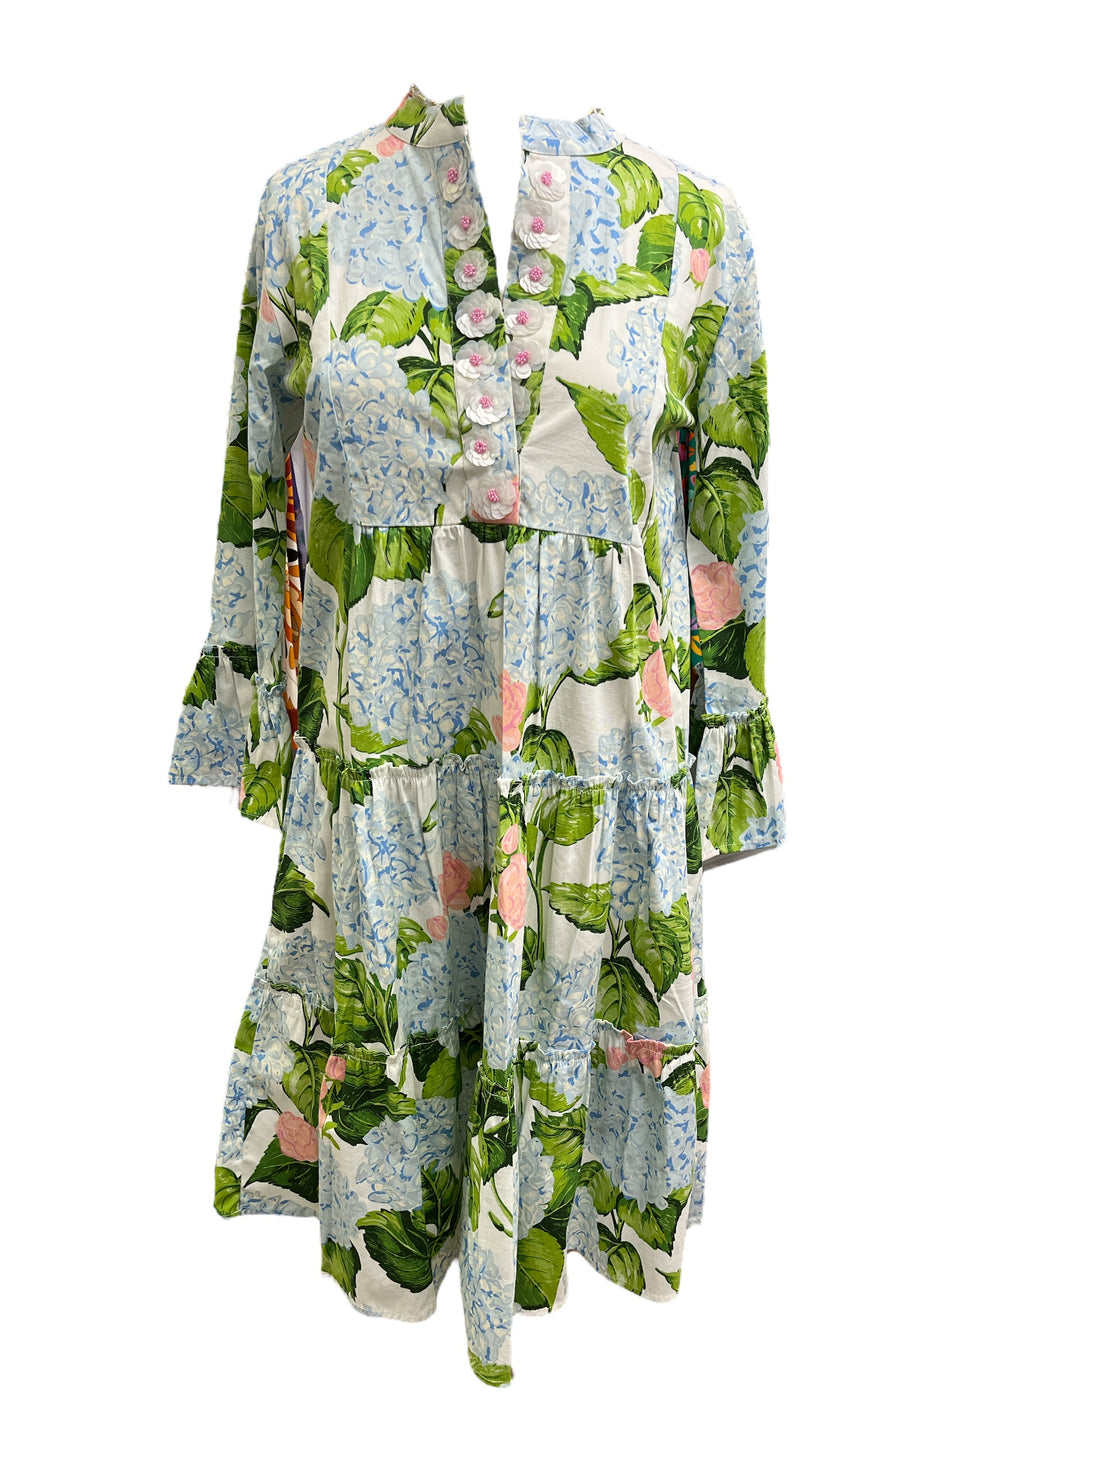 Sheridan French | Caty Dress in Classic Hydrangea